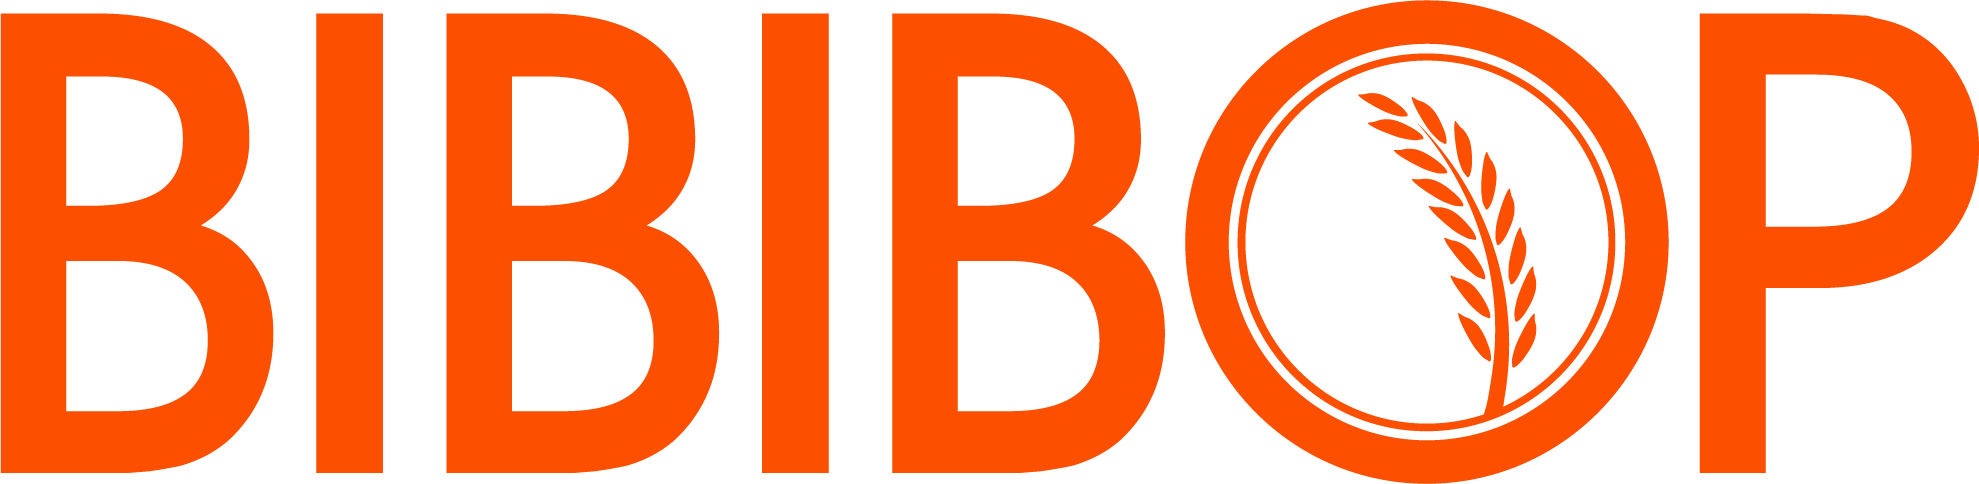 Bibibop